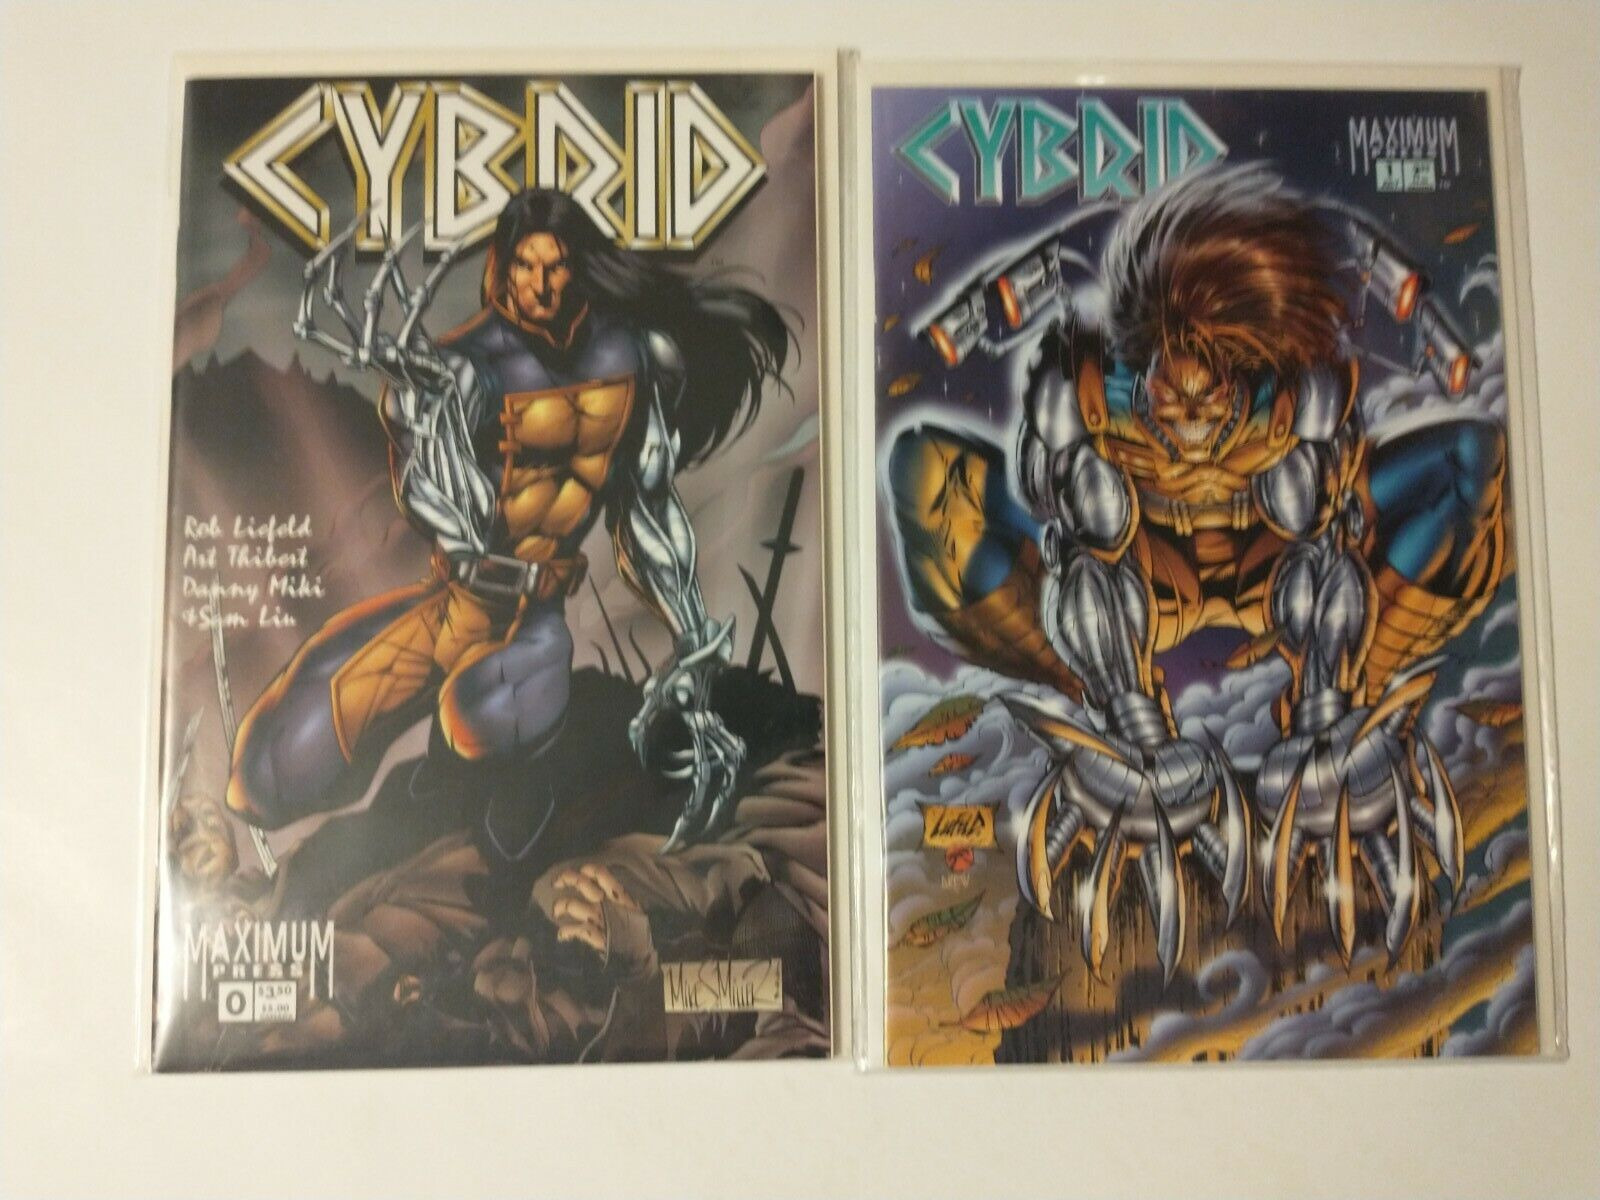 Cybrid #0 & #1 Complete Set Image Comics 1997 